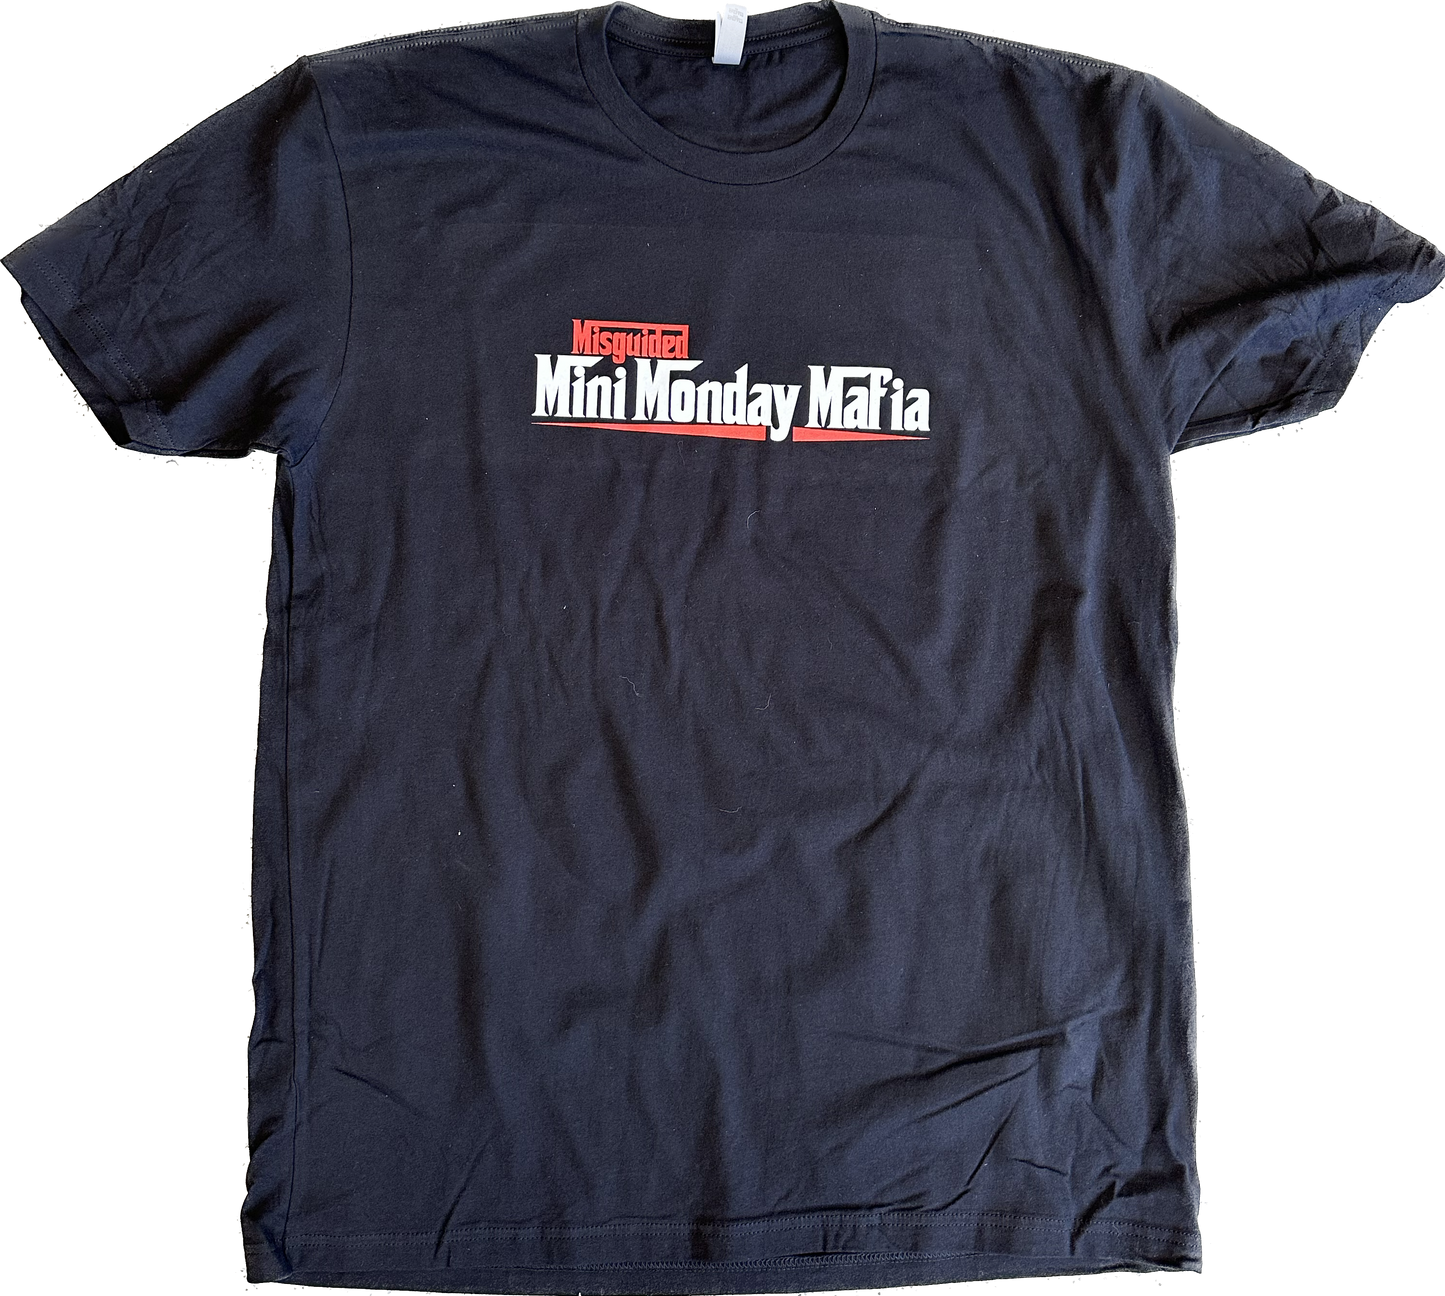 Mini Monday Mafia Tee!